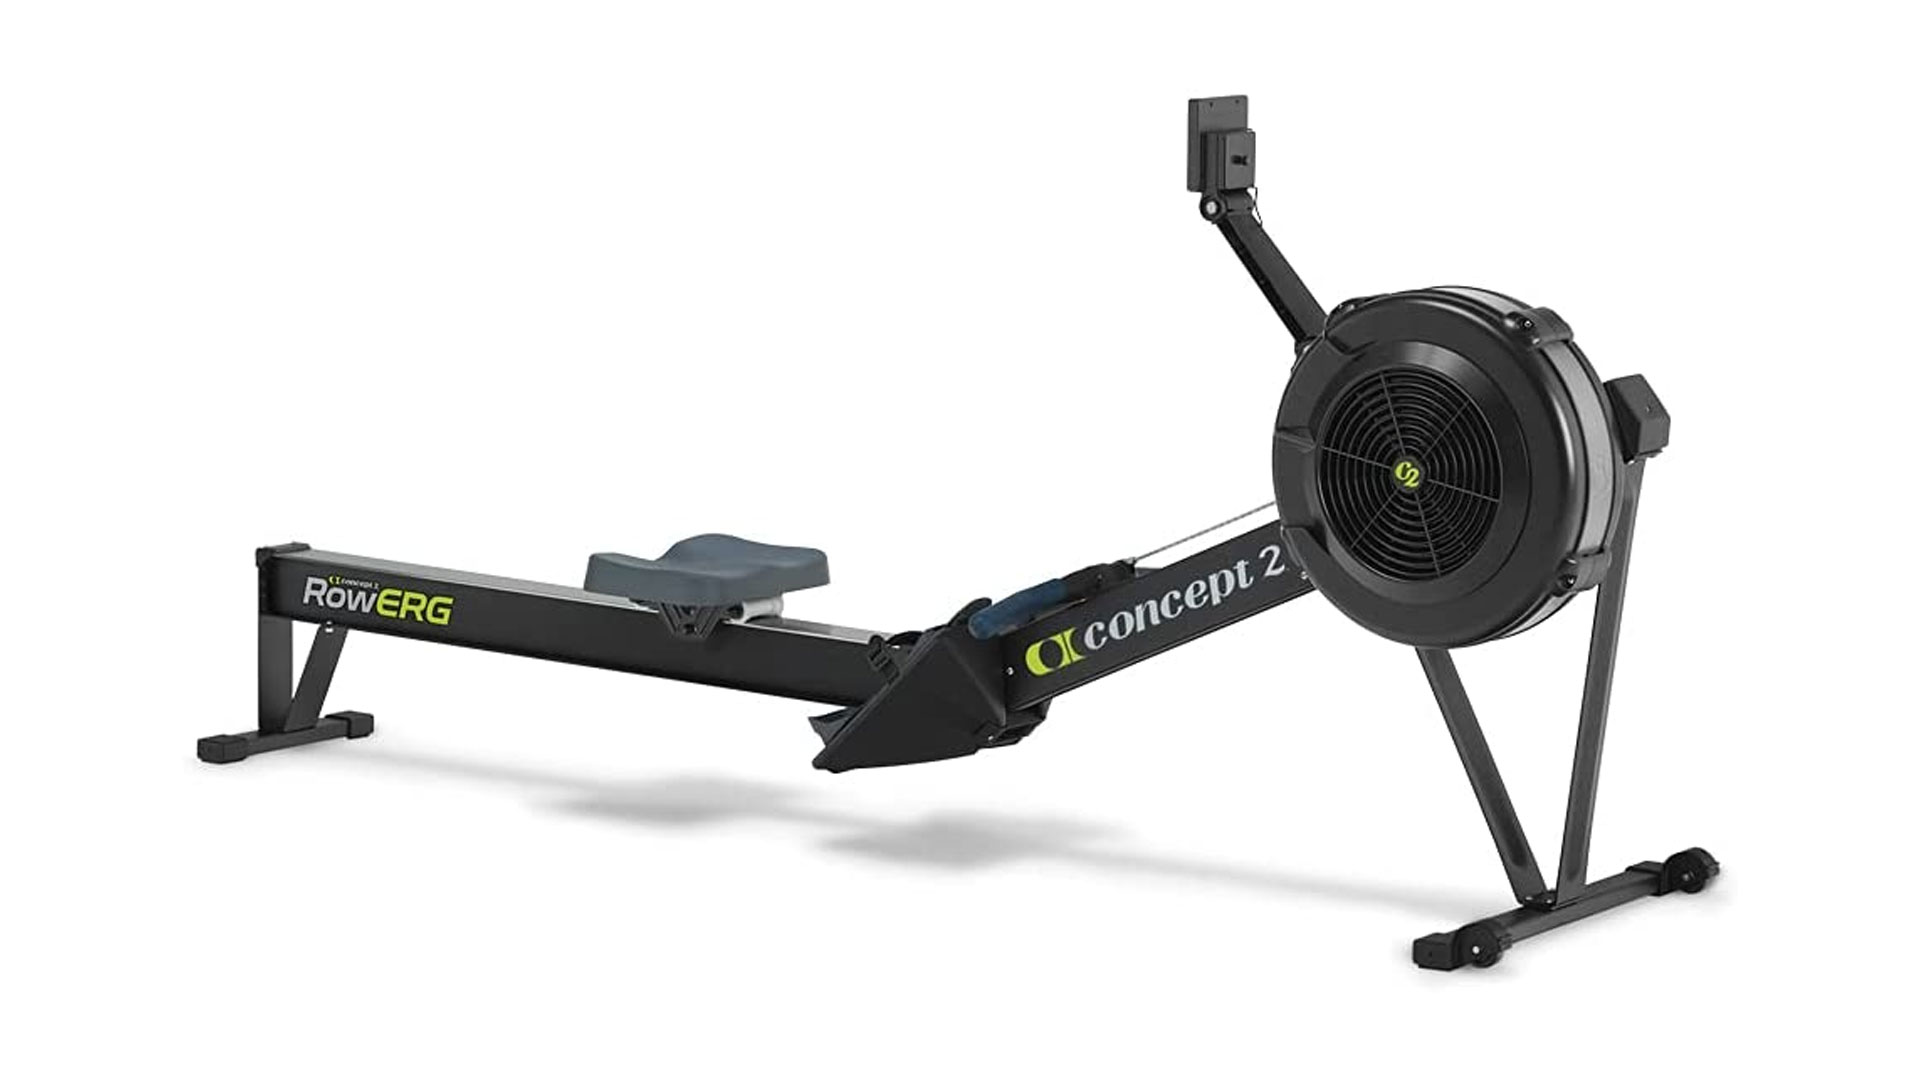 Best rowing machines 2021: Concept 2 Model D (RowErg)